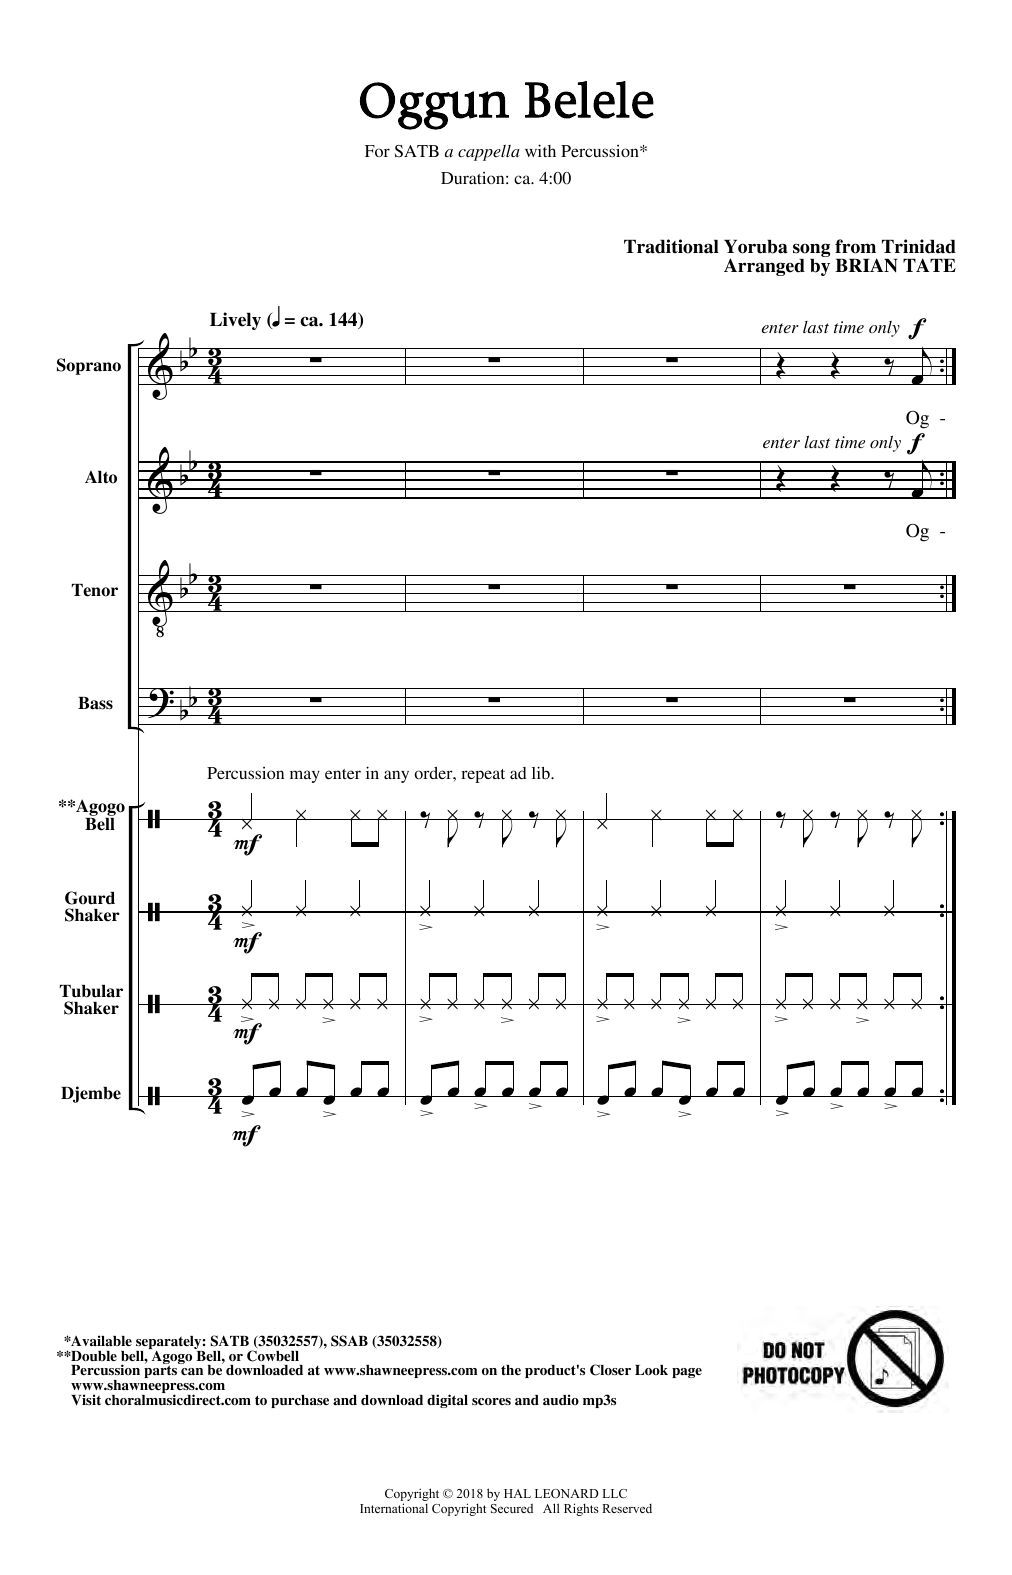 Brian Tate Oggun Belele sheet music notes and chords arranged for SATB Choir